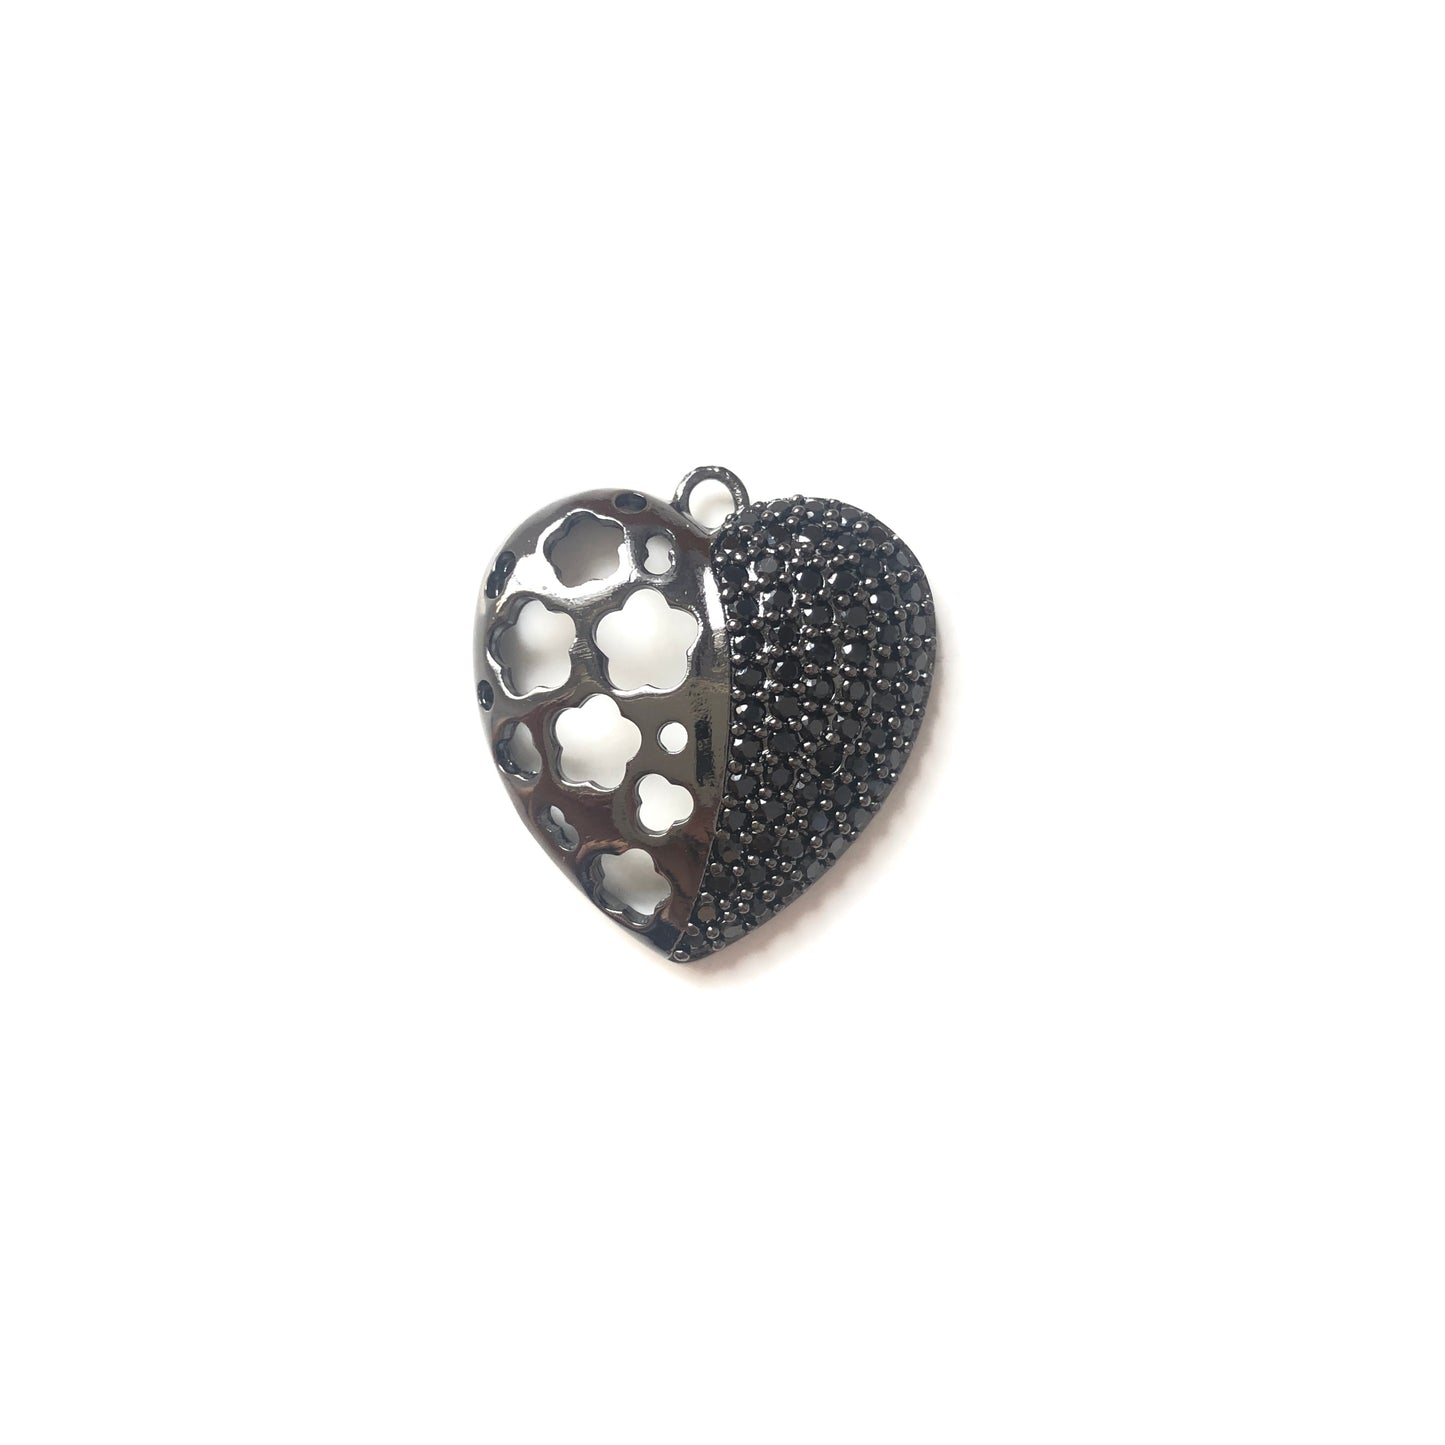 10pcs/lot 24.3*22.8mm CZ Paved Hollow Heart Charms Black on Black CZ Paved Charms Hearts On Sale Charms Beads Beyond